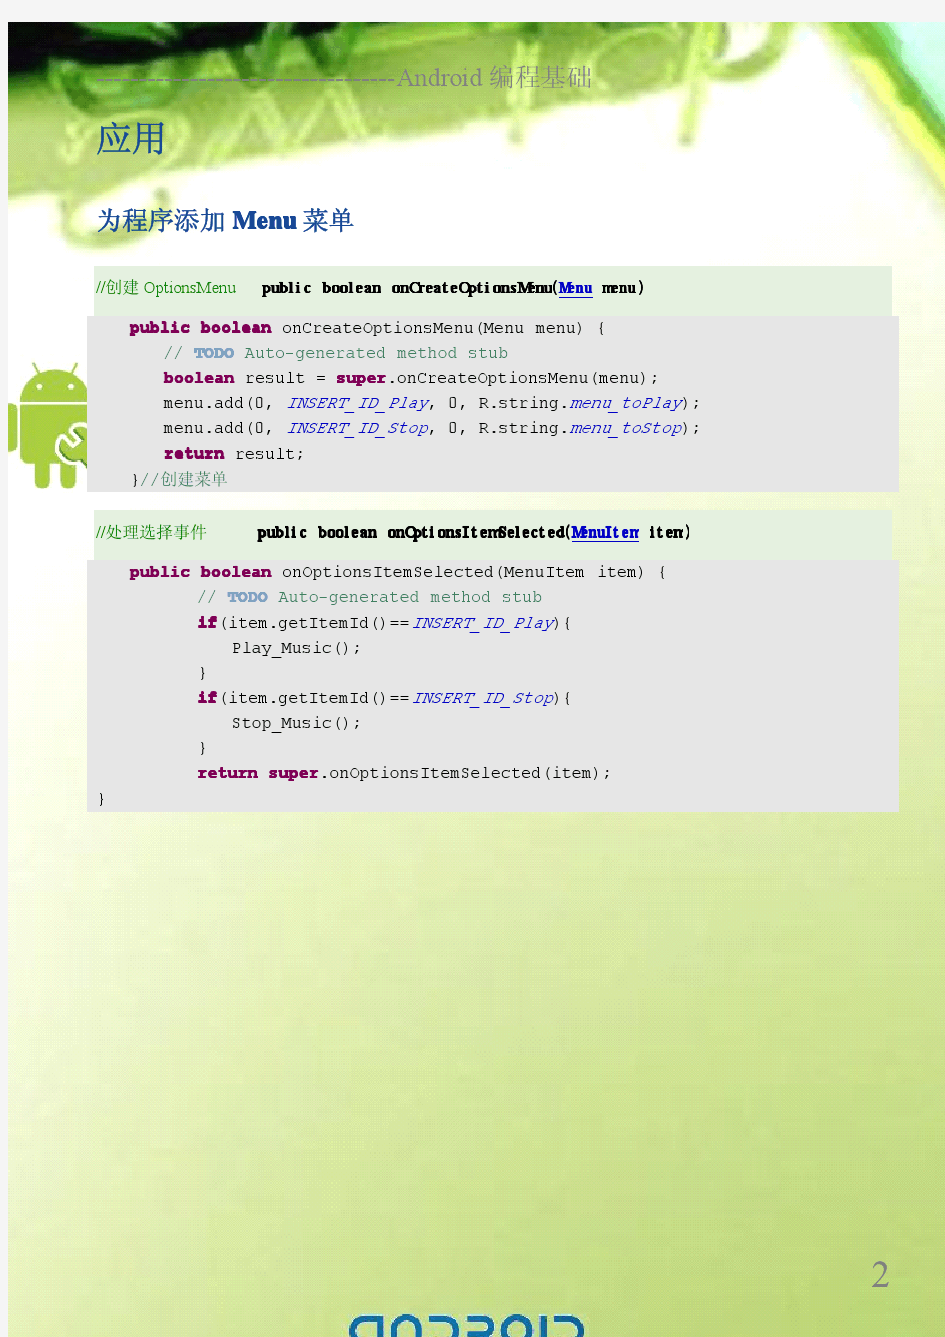 新版Android开发教程+笔记十三(待续)--应用、permission、资源